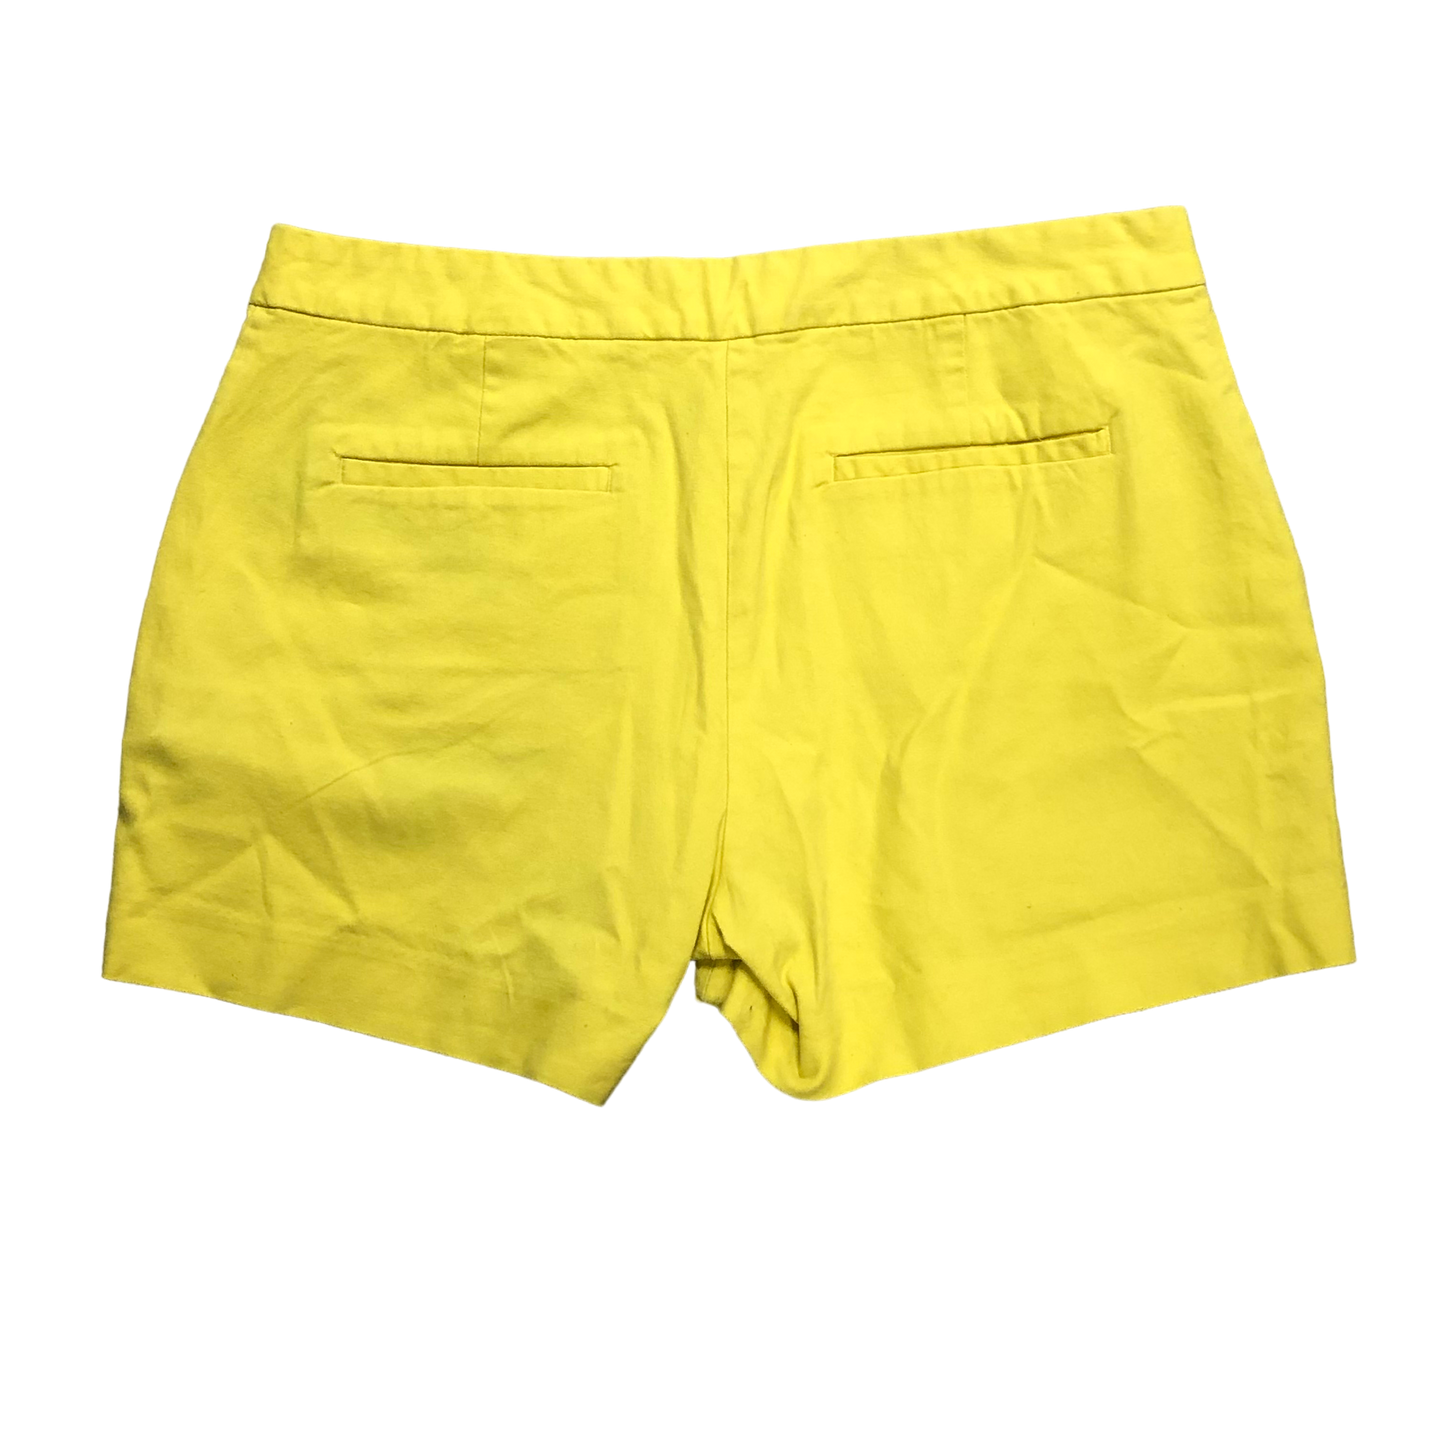 Shorts By Banana Republic  Size: 10